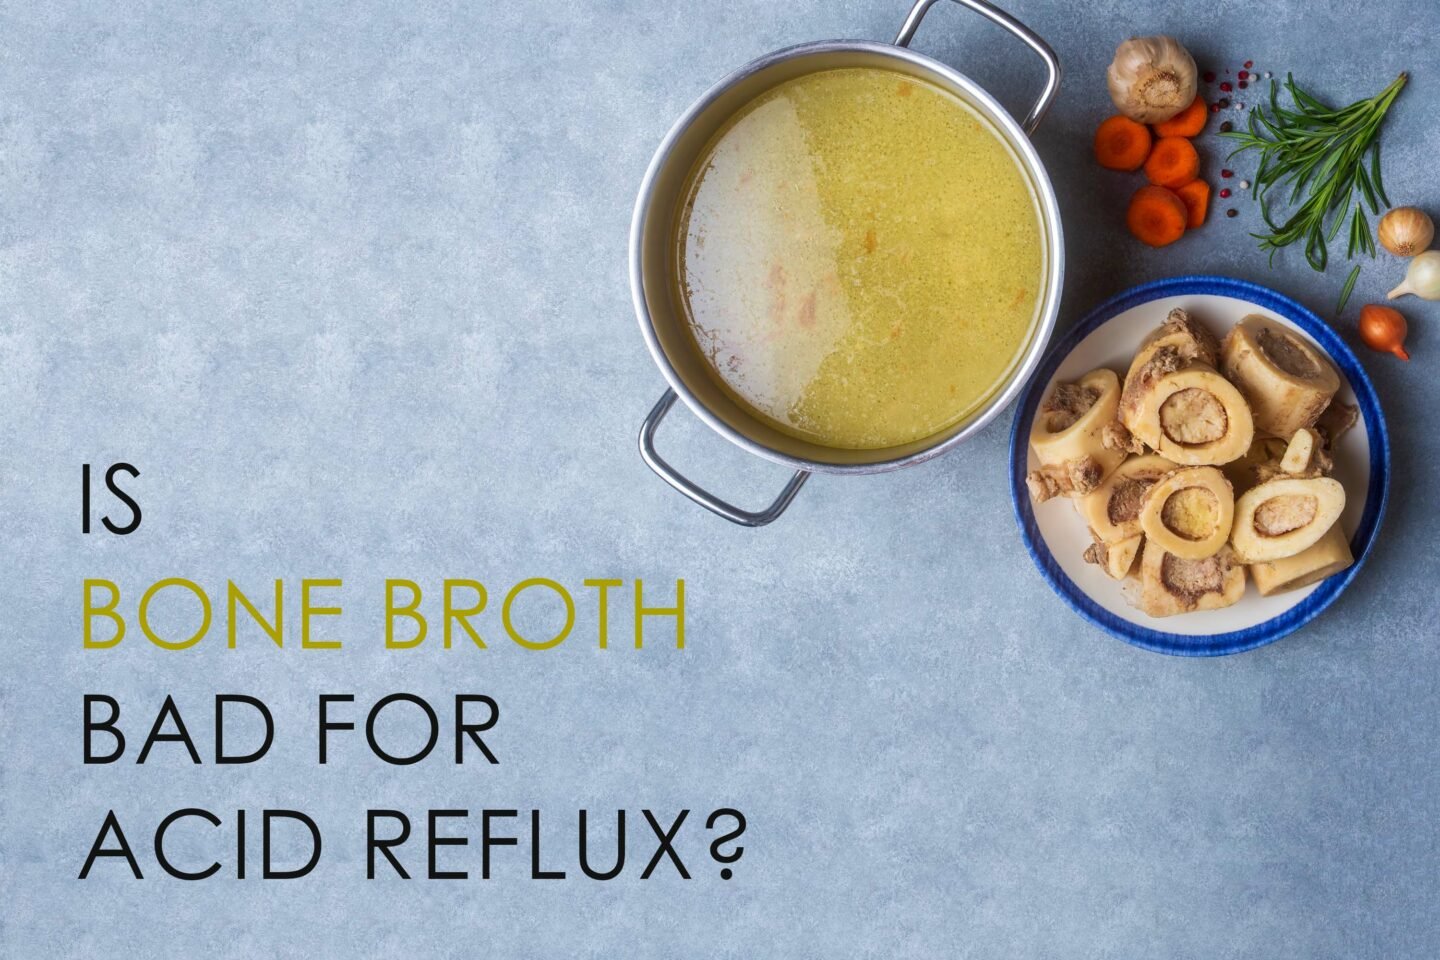 is bone broth good or bad for acid reflux